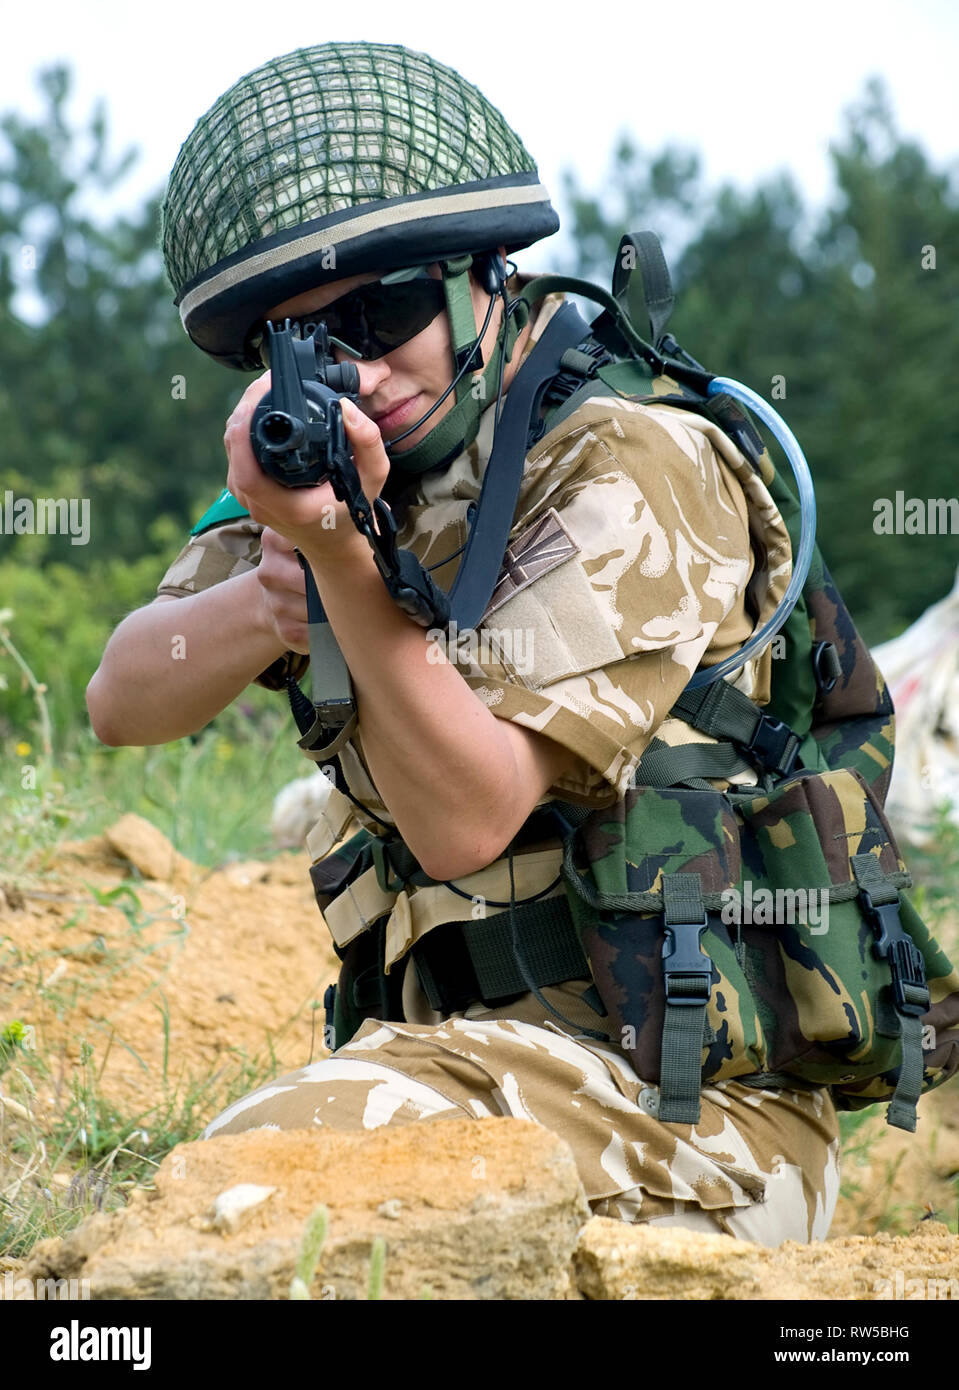 Female British soldier in desert uniform aiming her rifle. Stock Photo